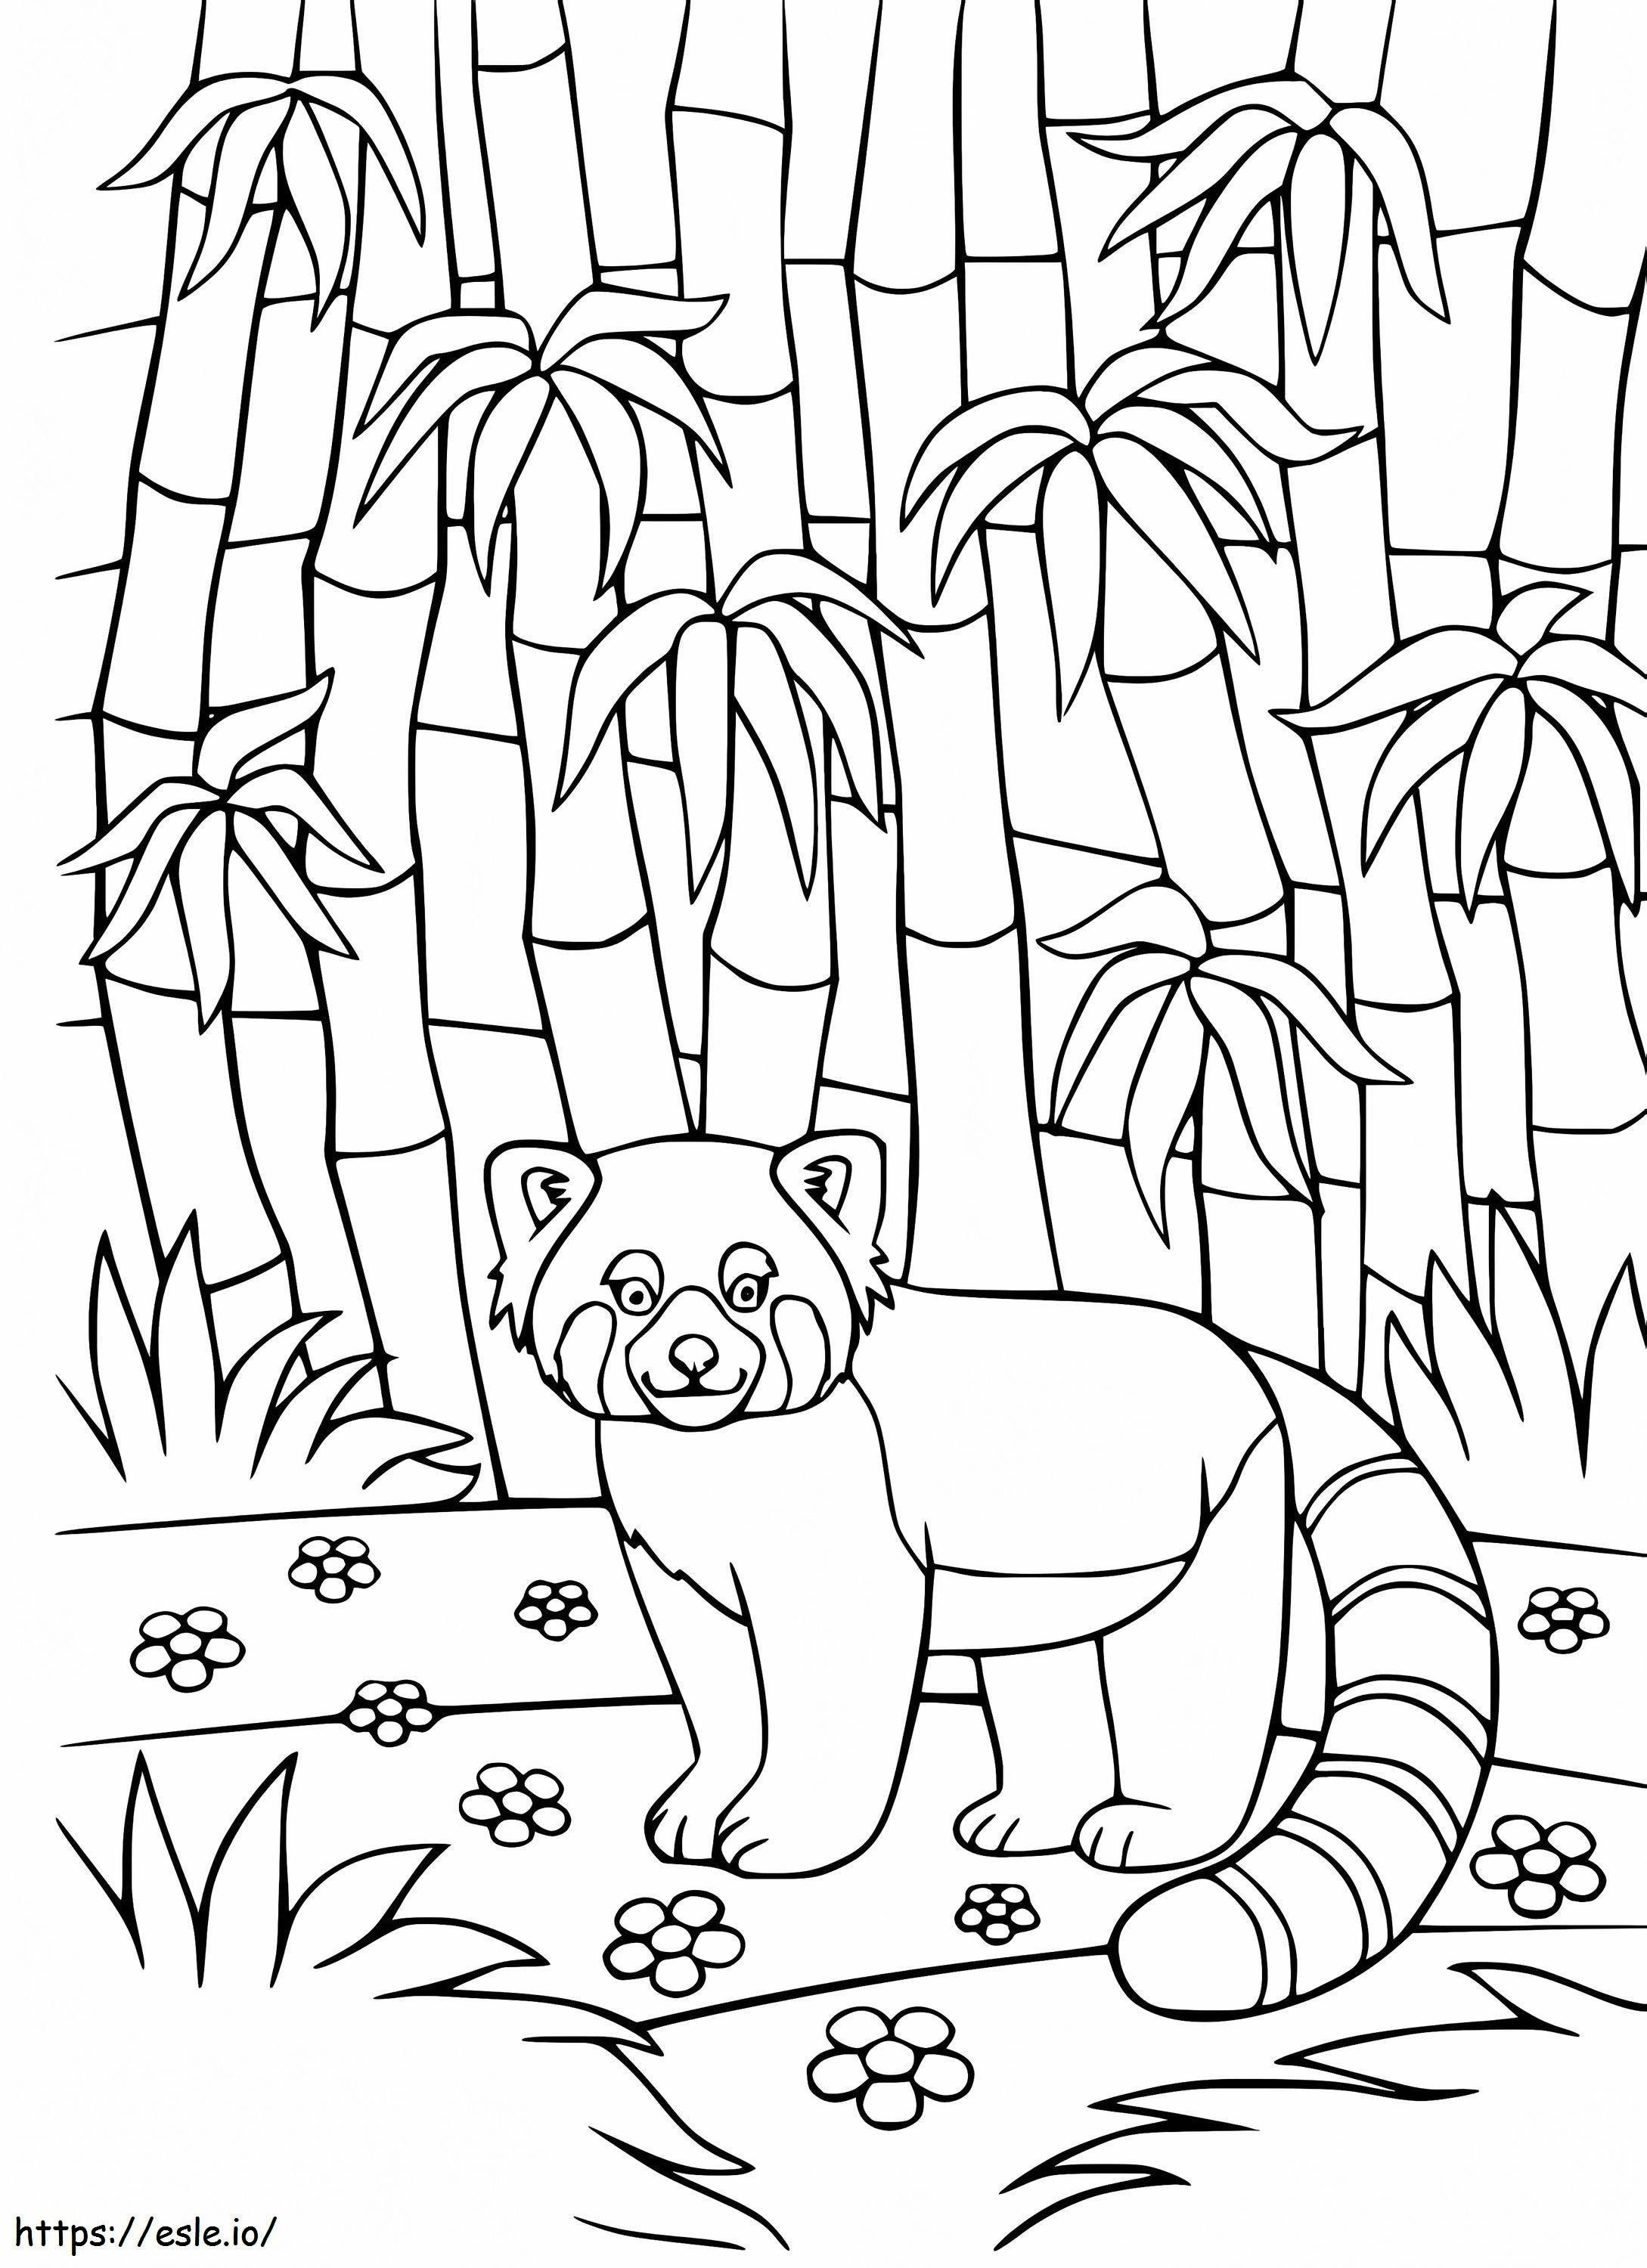 Rode Panda In Bamboebos kleurplaat kleurplaat